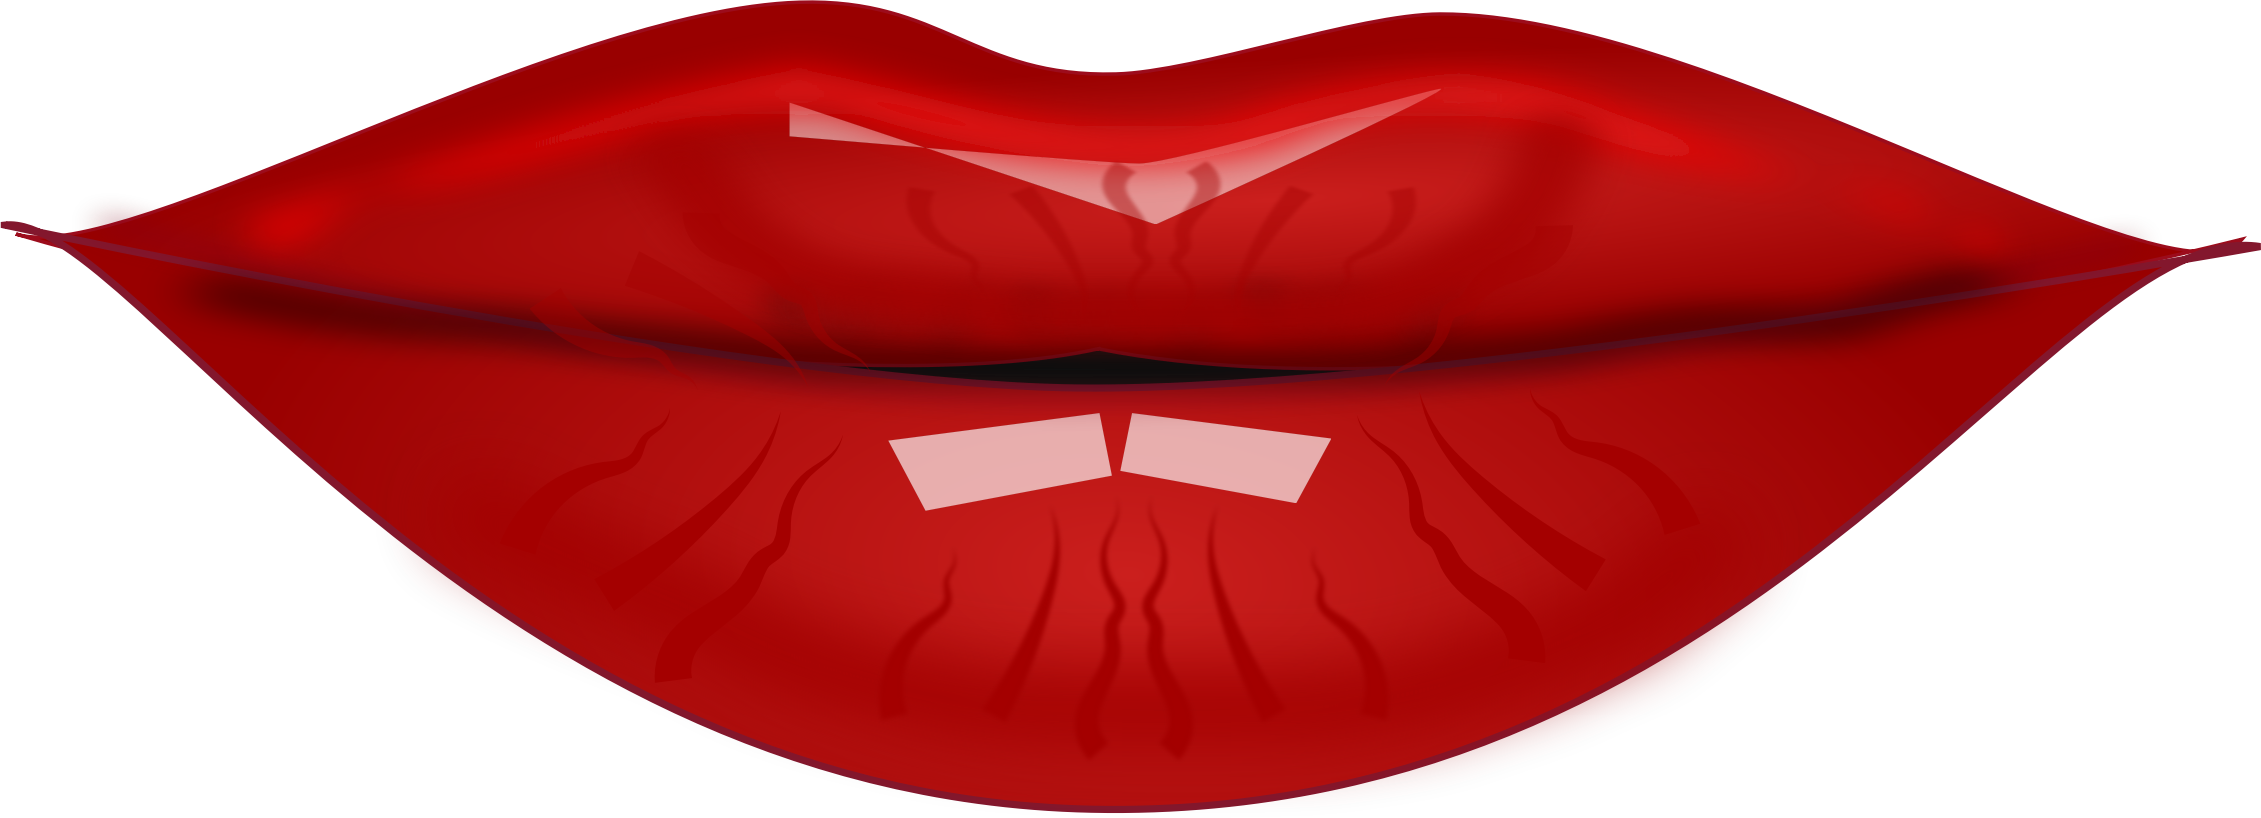 Lips Png Animated : Lip boy lip lips anamated mouth cartooning animated ...